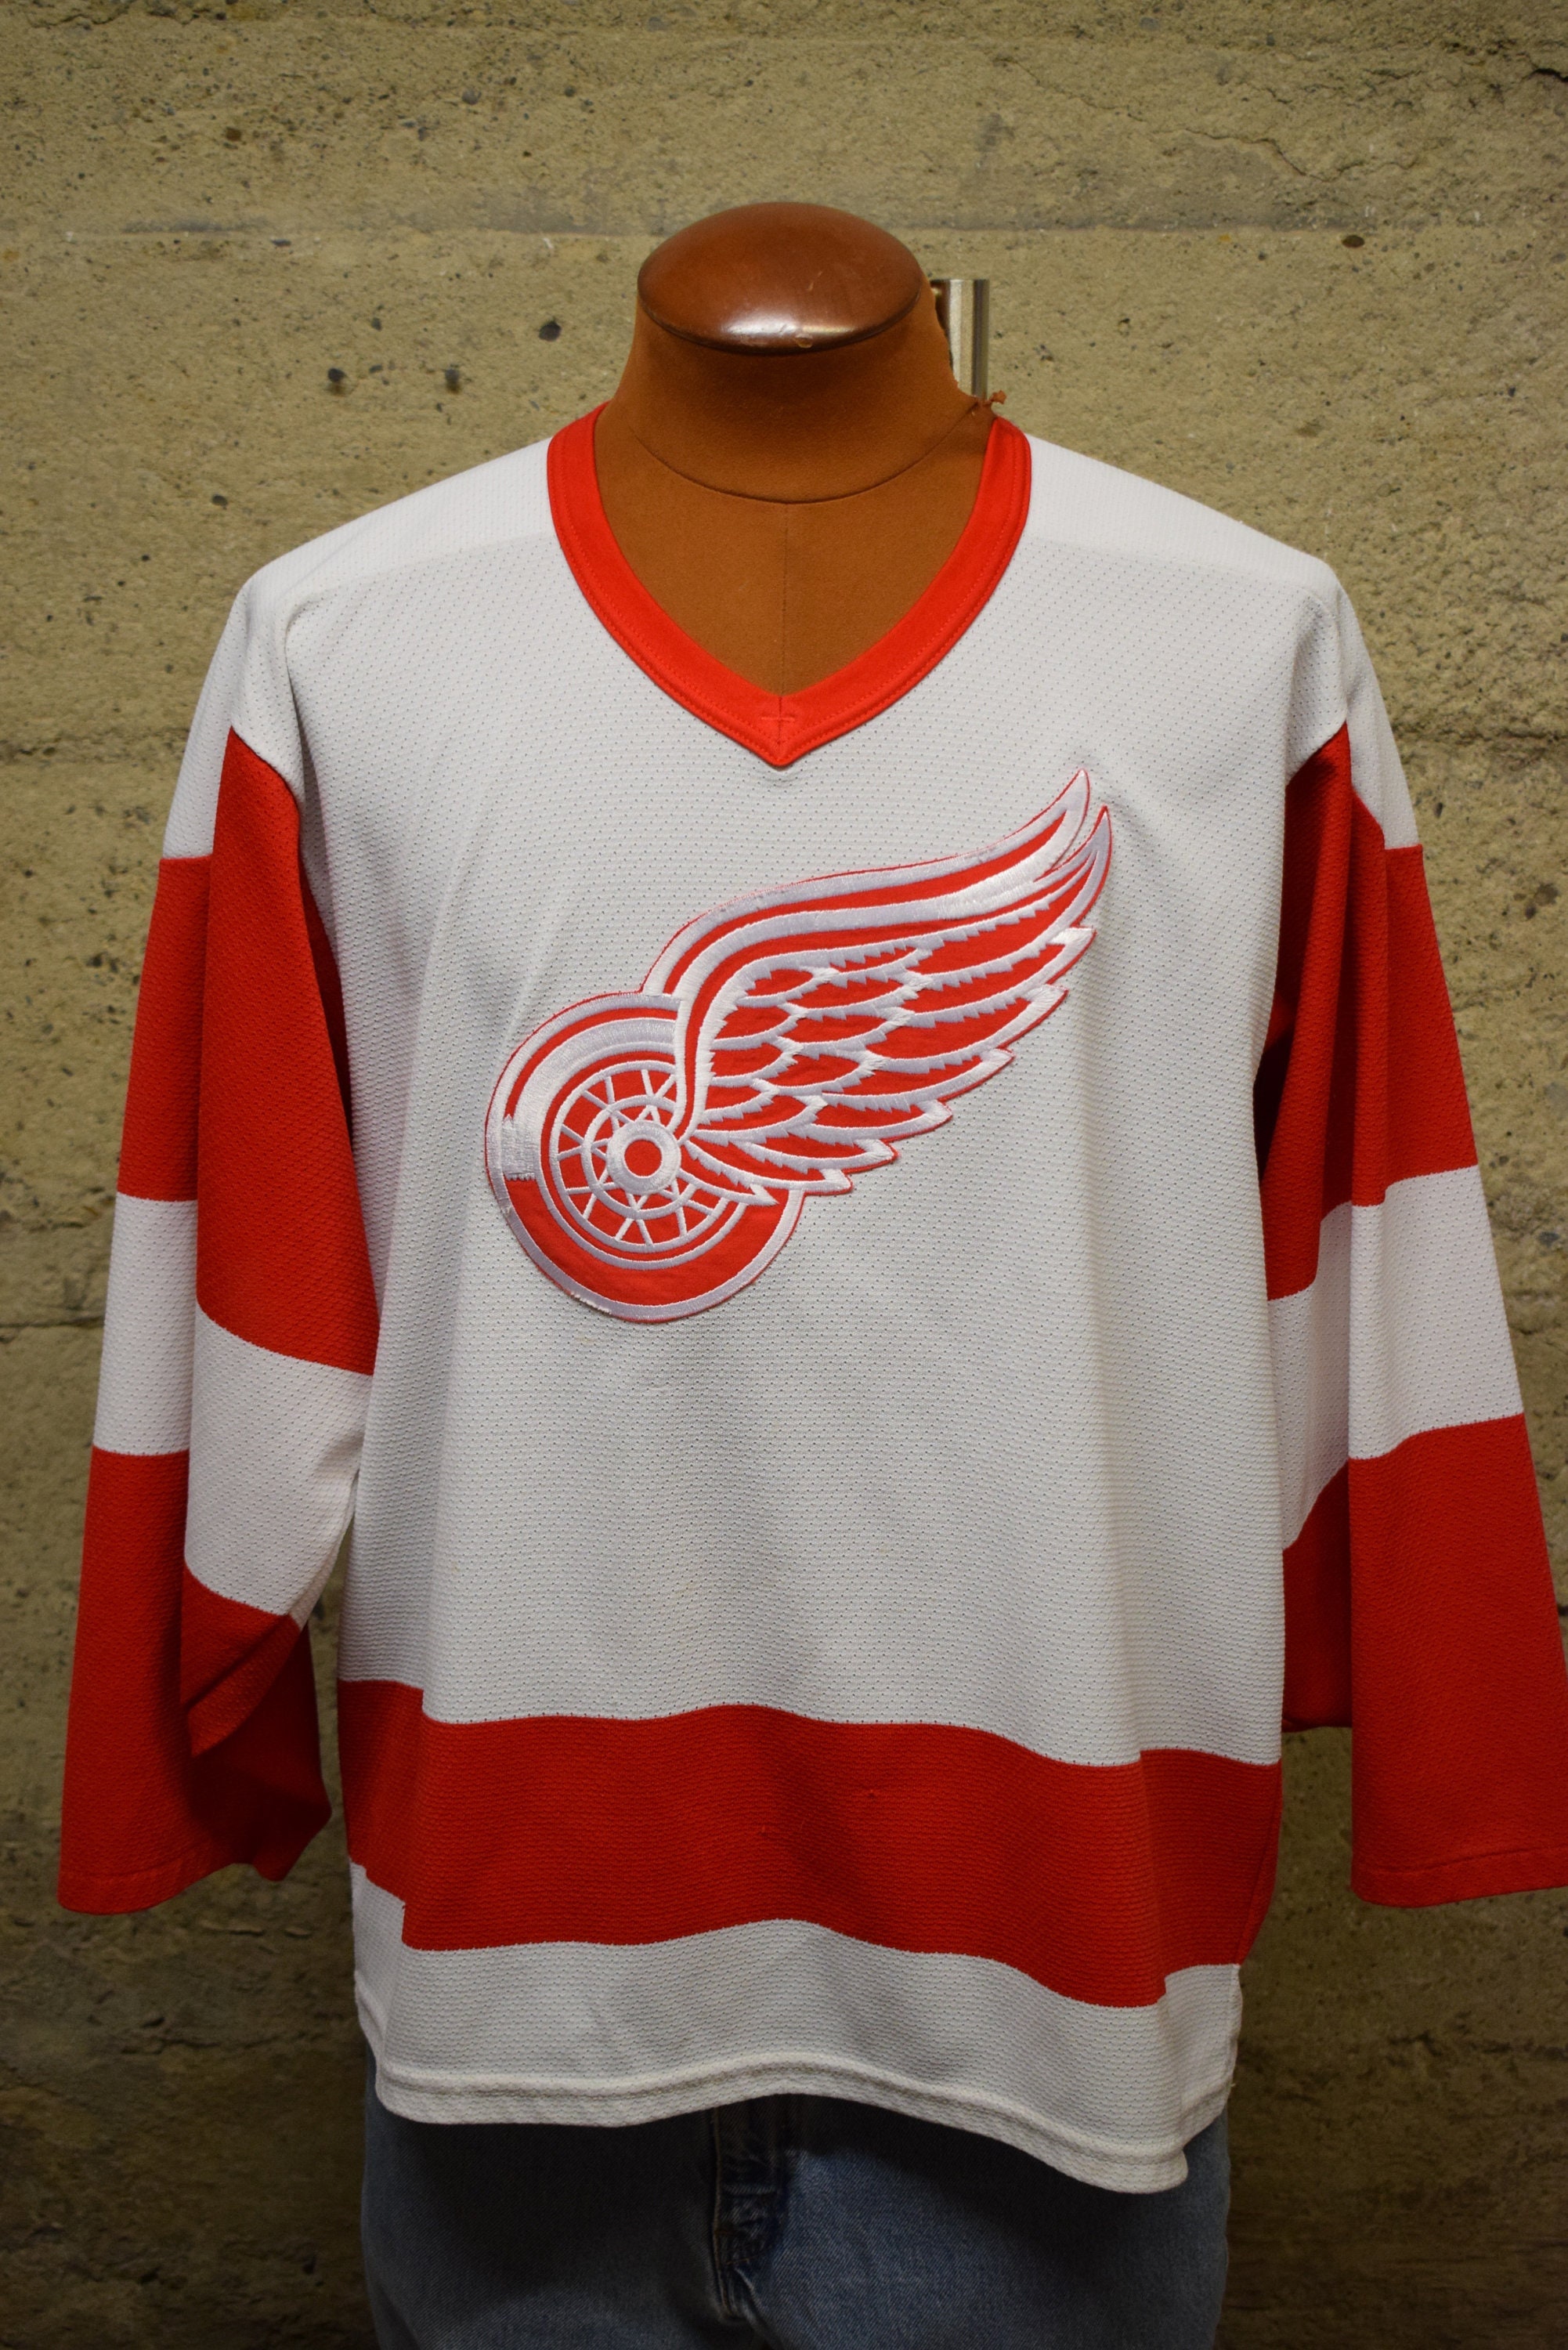 Mavin  Steve Yzerman Vintage Detroit Red Wings CCM Maska Hockey Jersey M  NHL